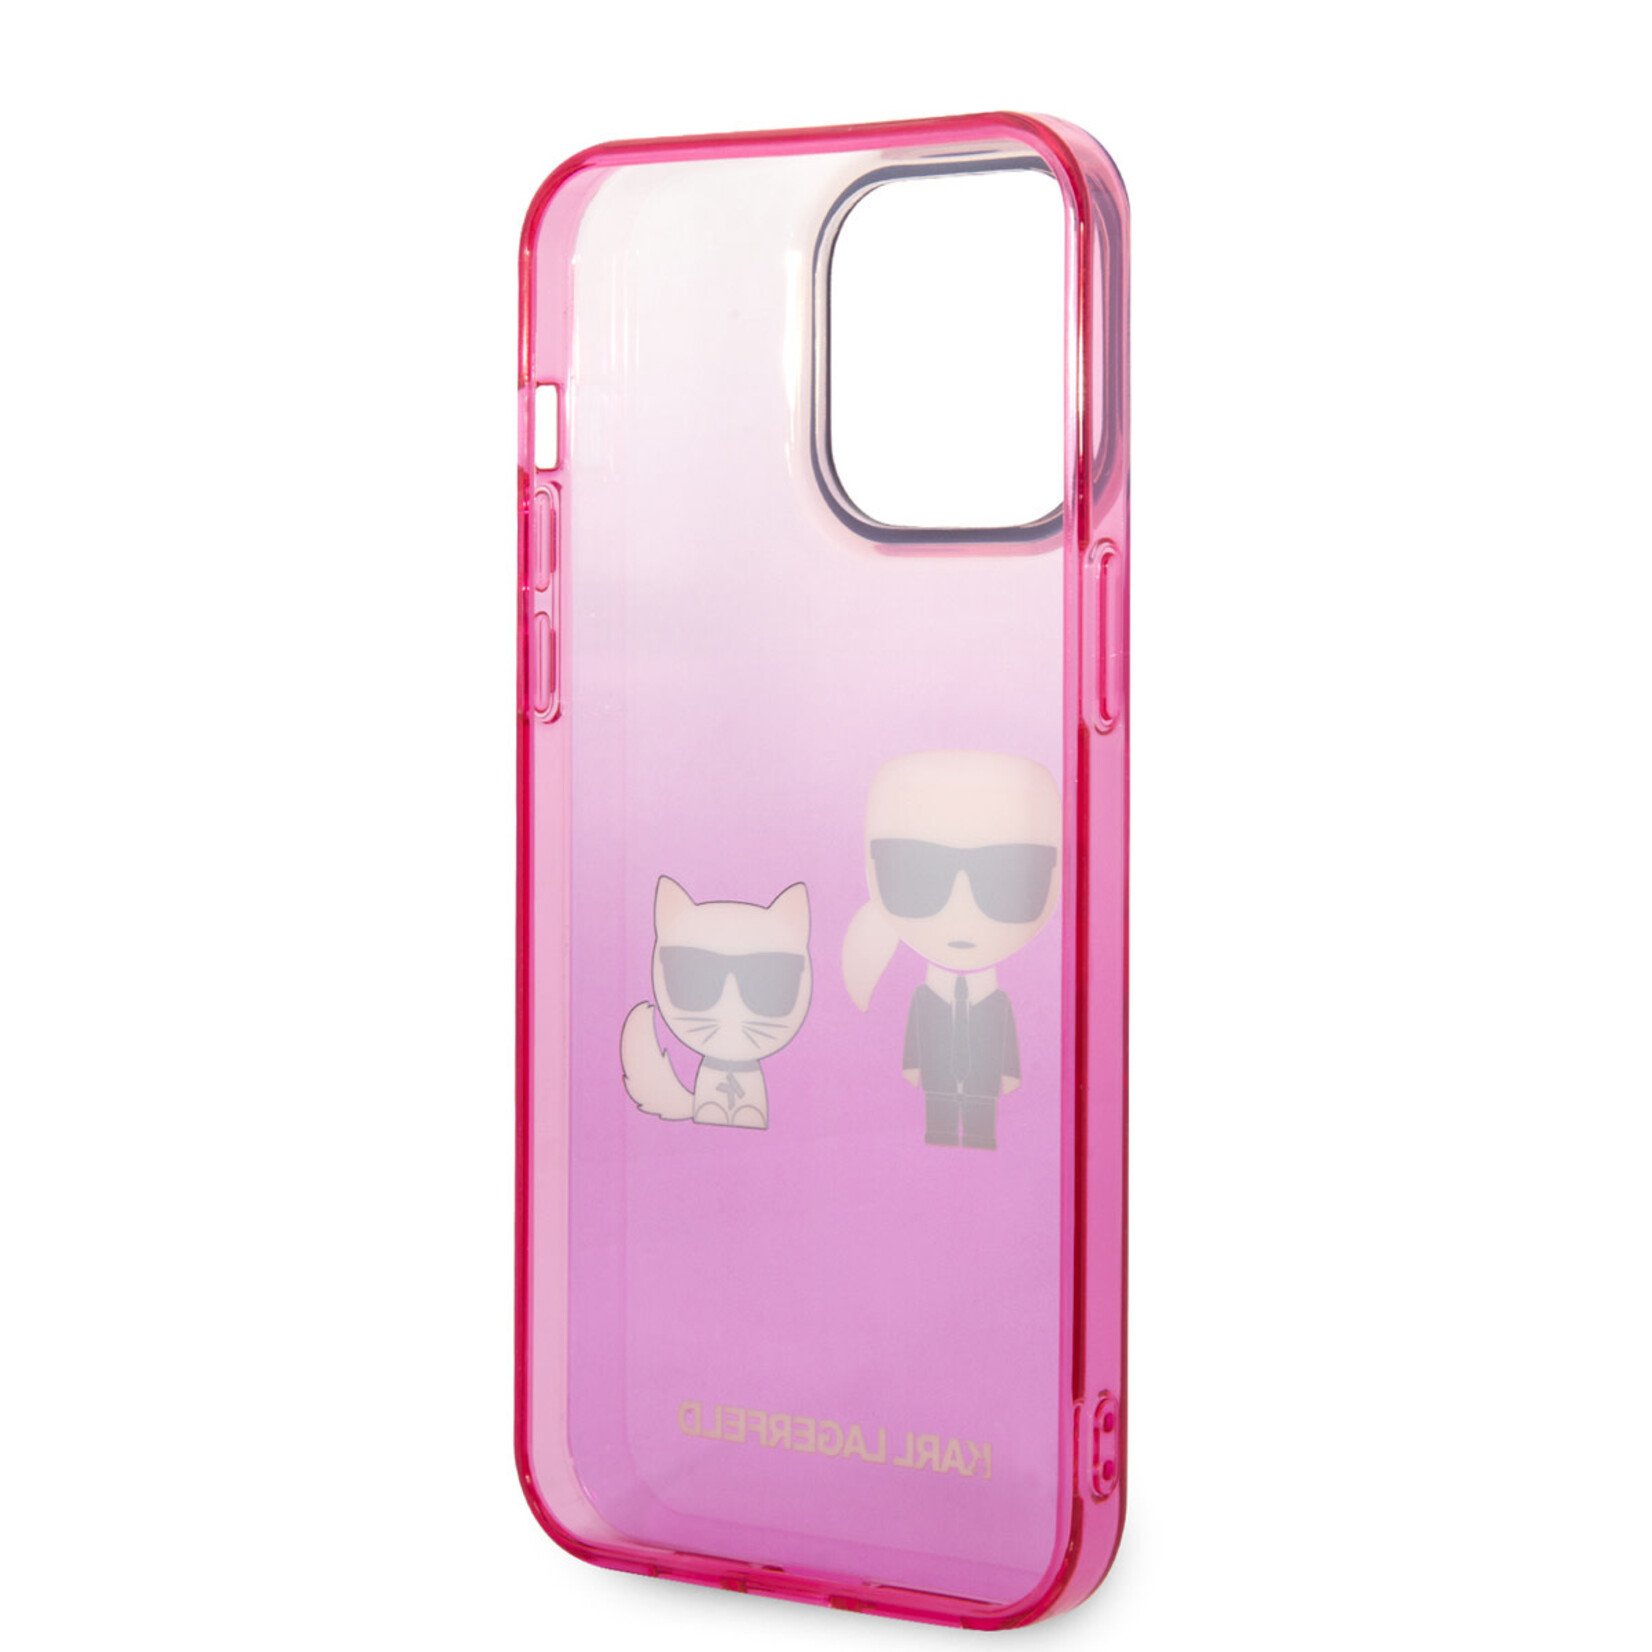 Karl Lagerfeld Karl Lagerfeld Transparant Roze Polycarbonaat en TPU Back Cover Telefoonhoesje voor Apple iPhone 14 Pro Max - Bescherm je Telefoon met Stijl!